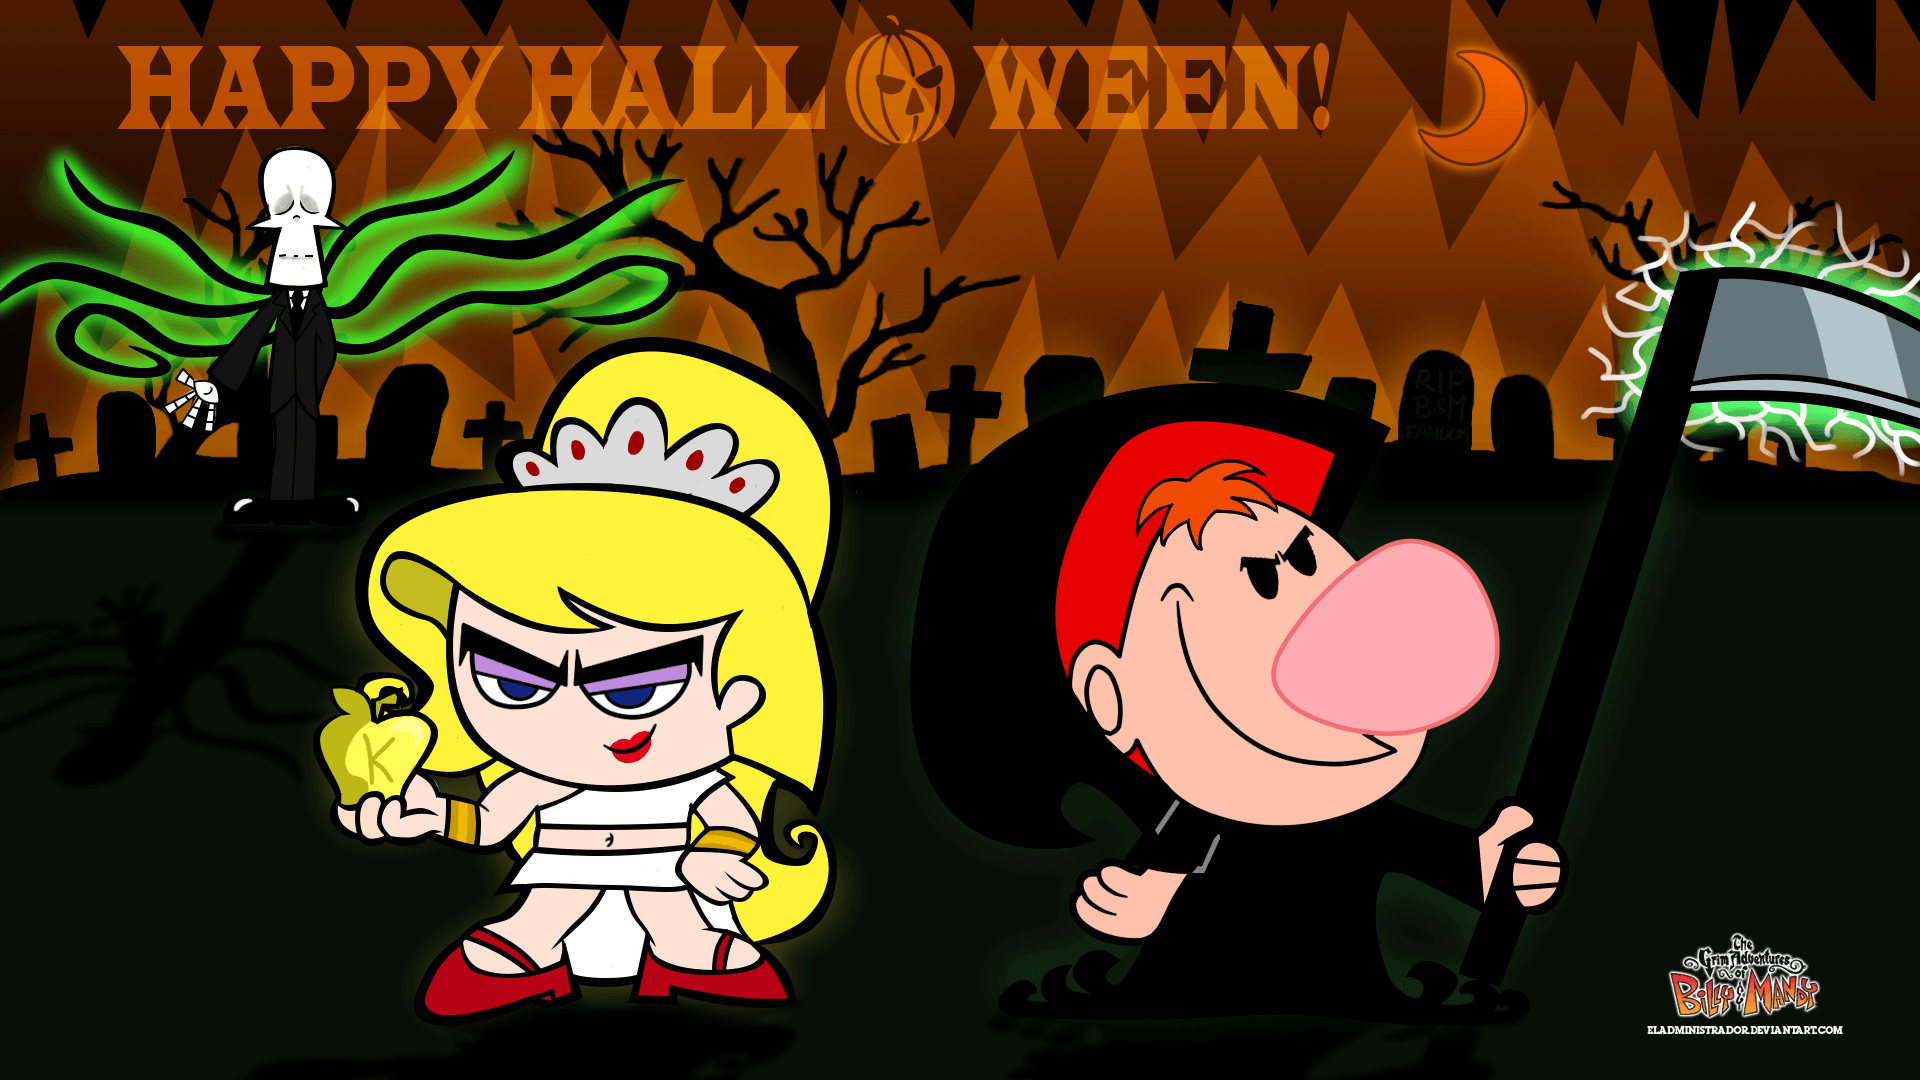 Happy Halloween! and Mandy